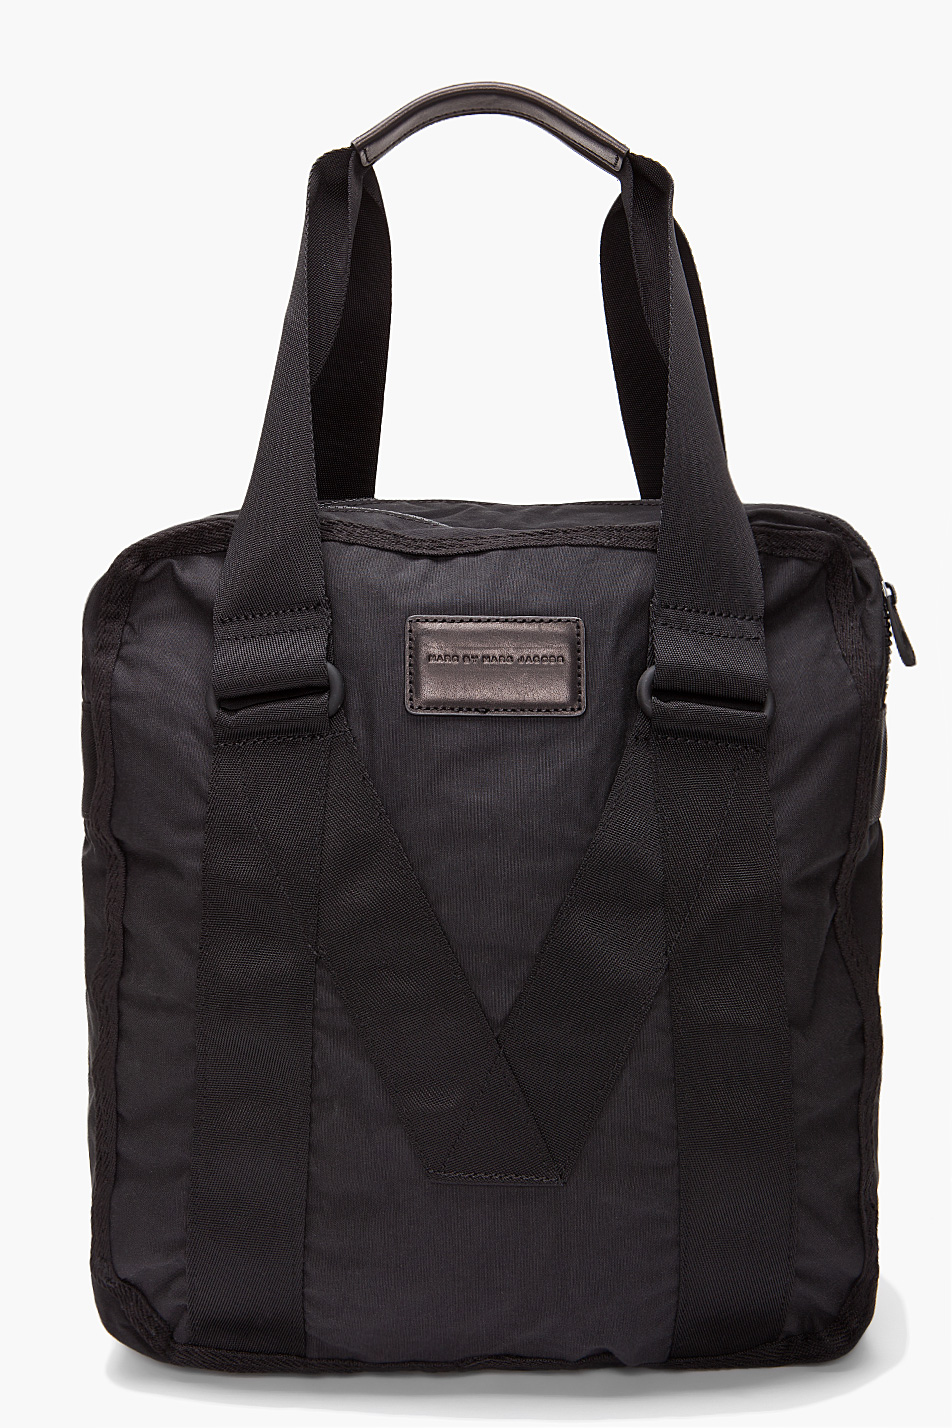 Marc By Marc Jacobs Standard Supply Shopper Bag in Black for Men - Lyst